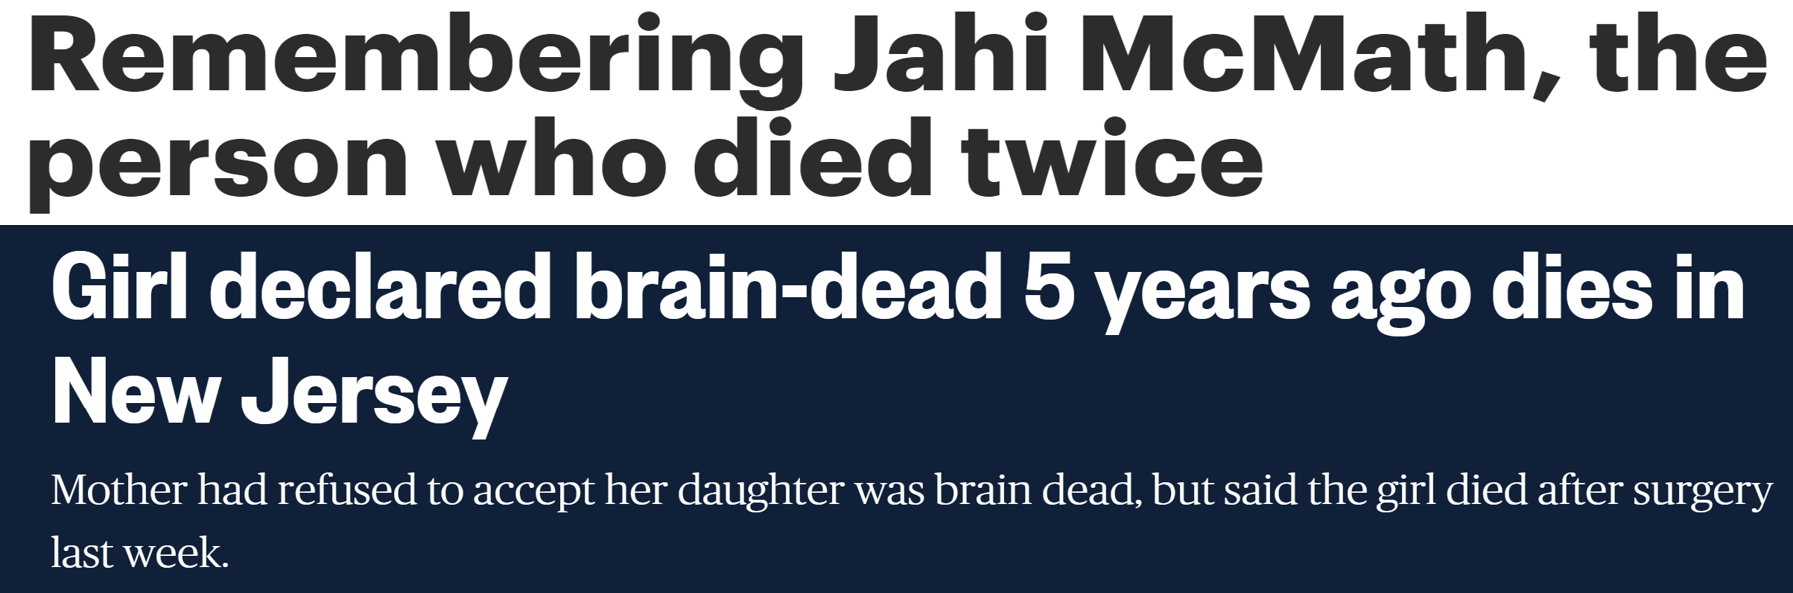 Jahi McMath died twice